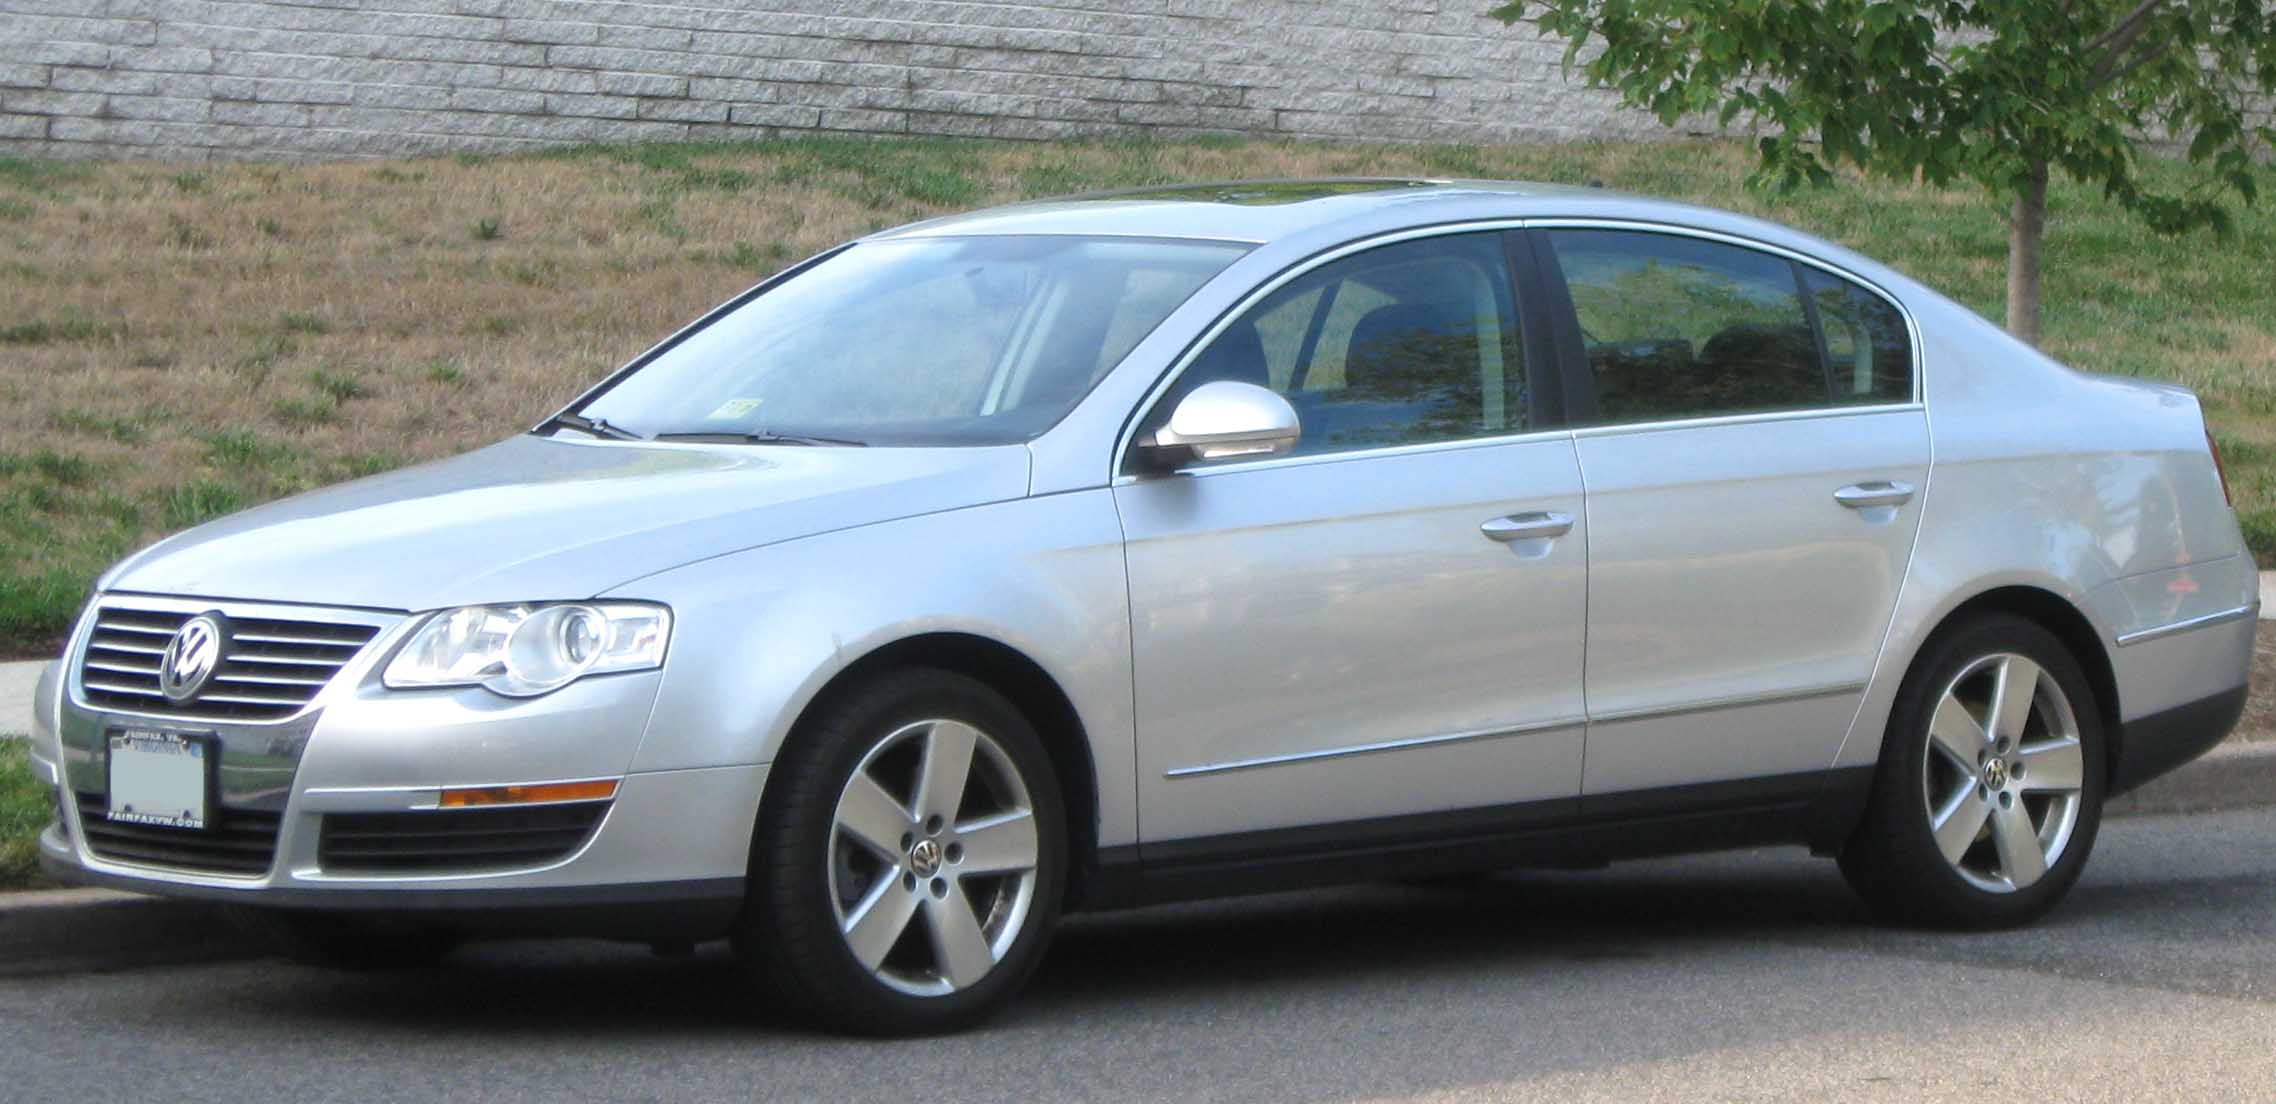 File:Volkswagen Passat sedan -- 07-22-2010.jpg - Wikimedia Commons